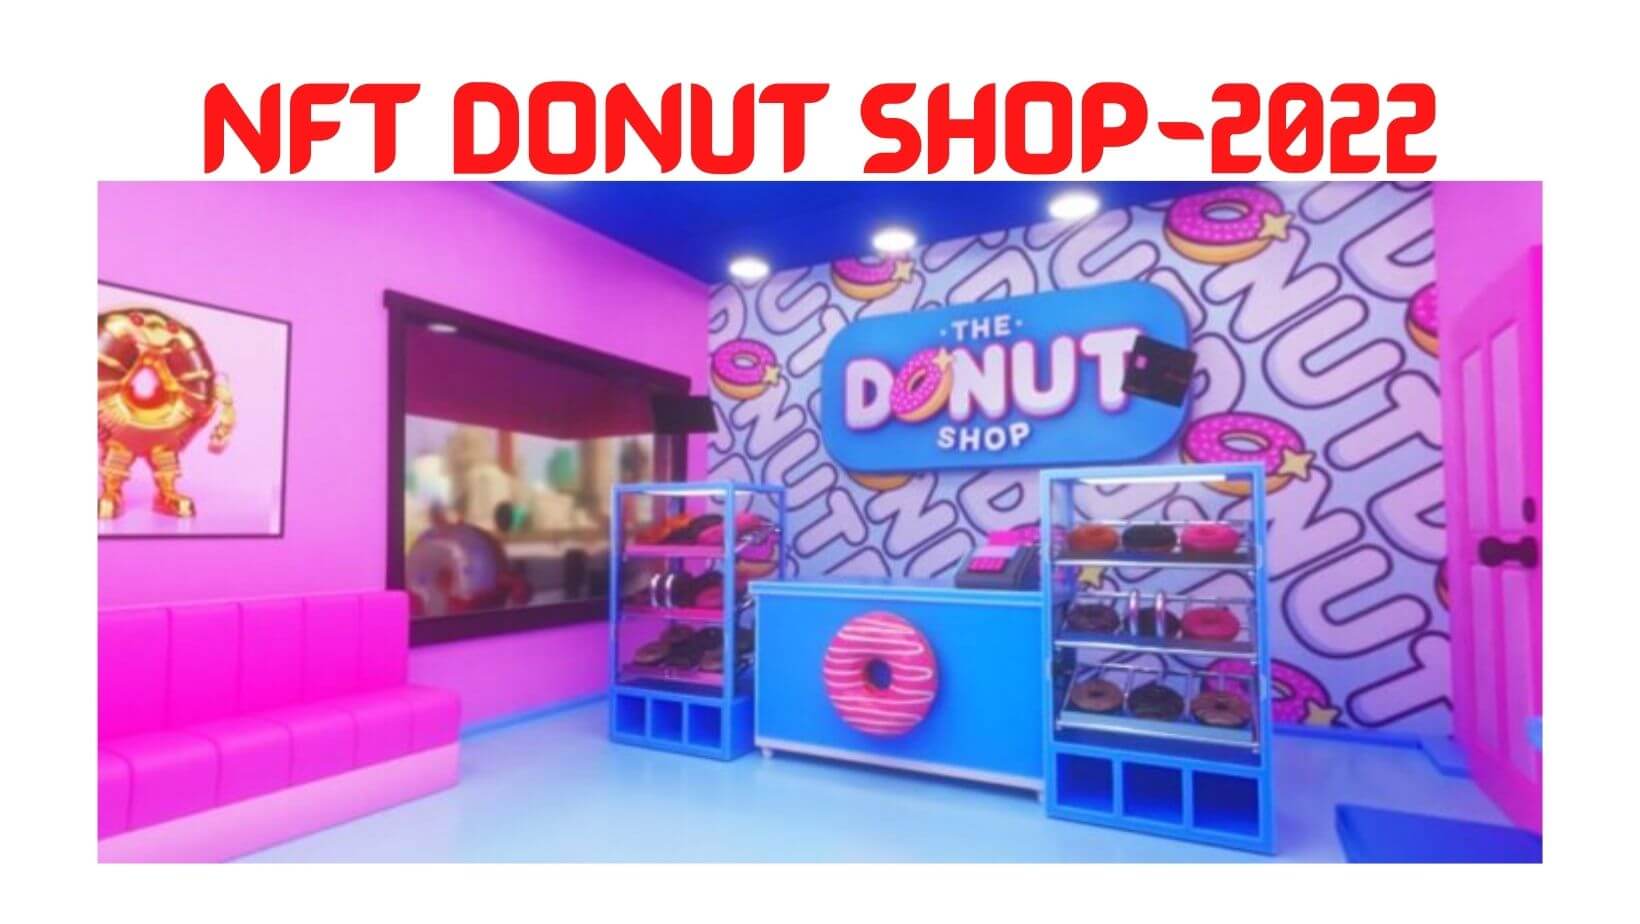 NFT Donut Shop